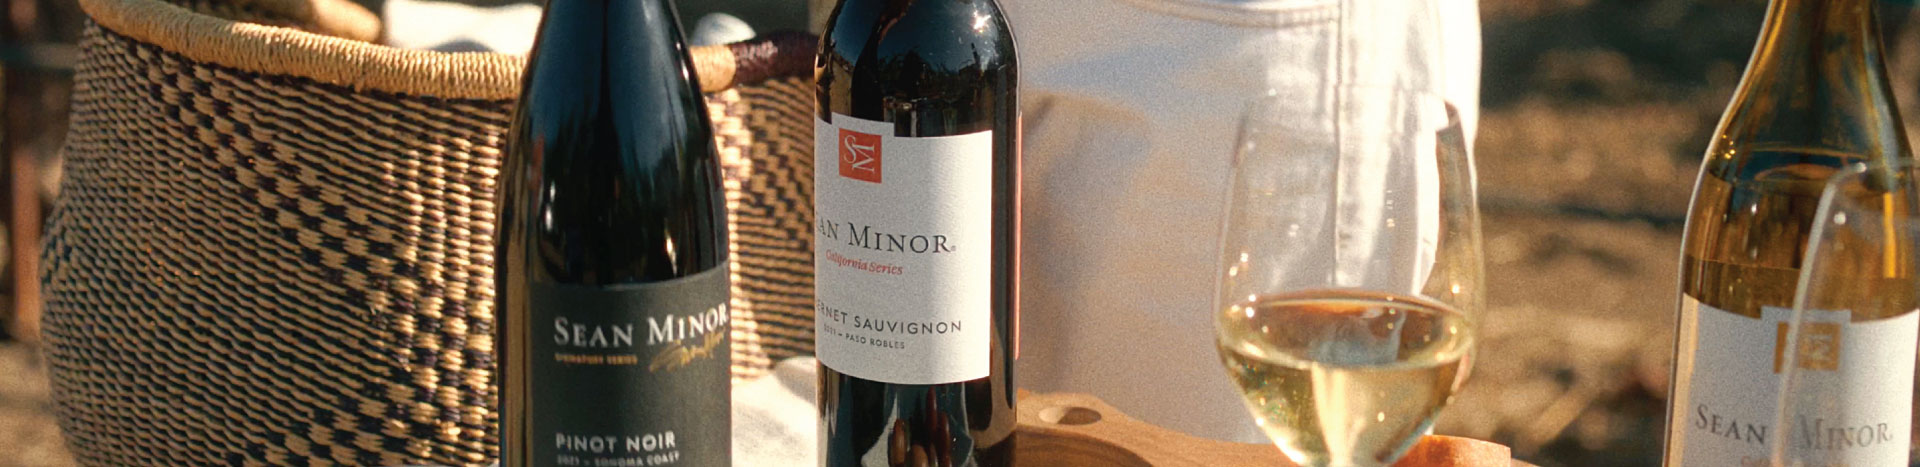 Sean Minor Wines in a picnic setting